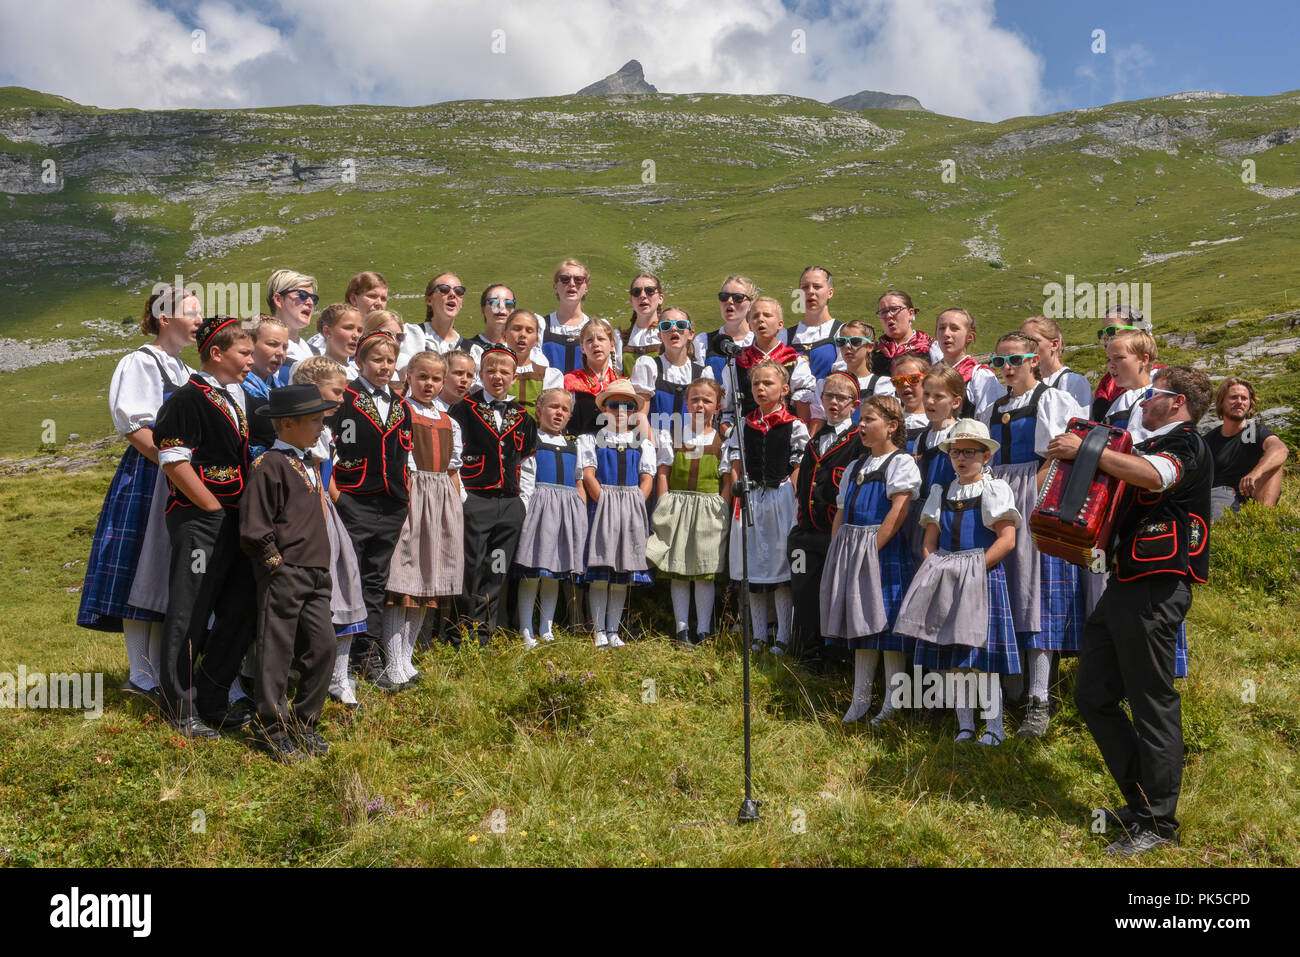 Traditional Swiss Clothing Stockfotos und -bilder Kaufen - Alamy